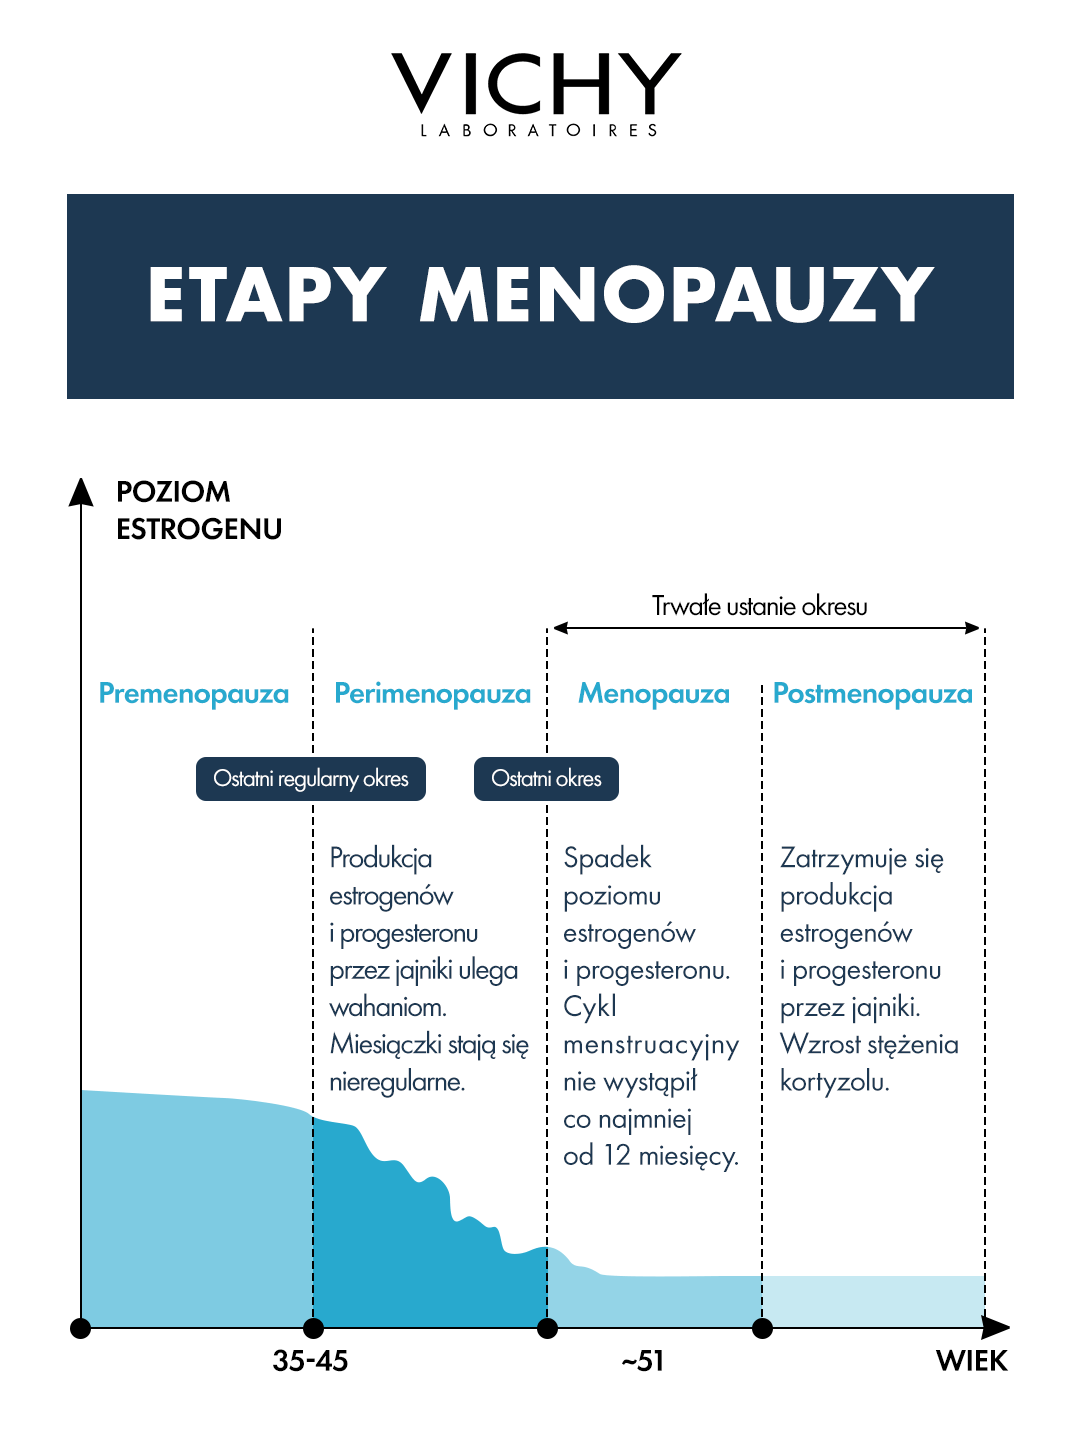 Etapy menopauzy – Vichy